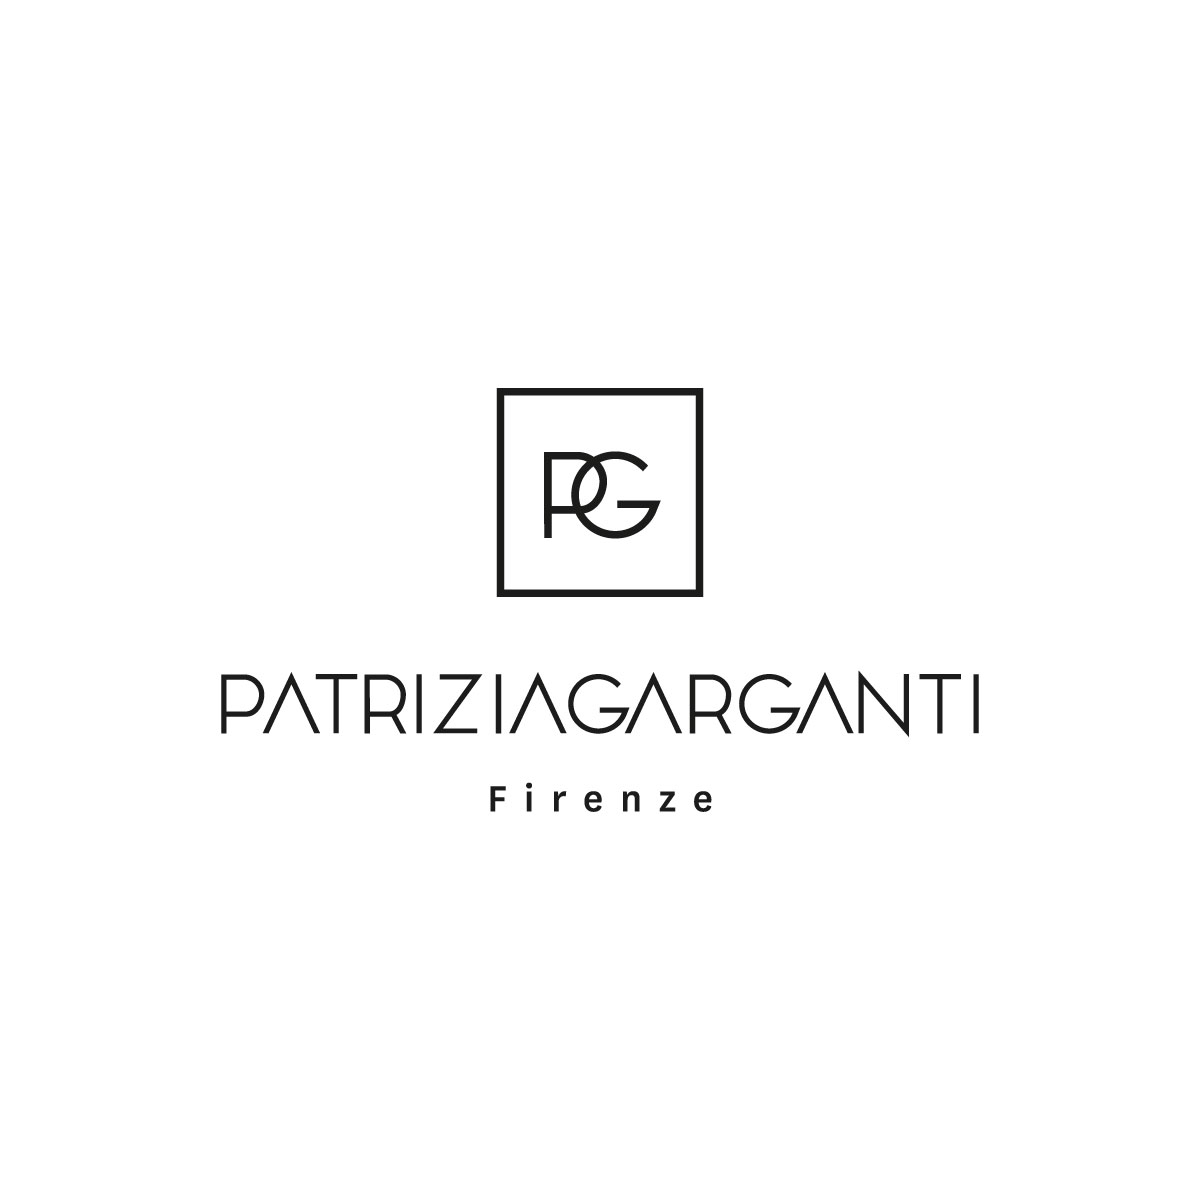 Patrizia Garganti